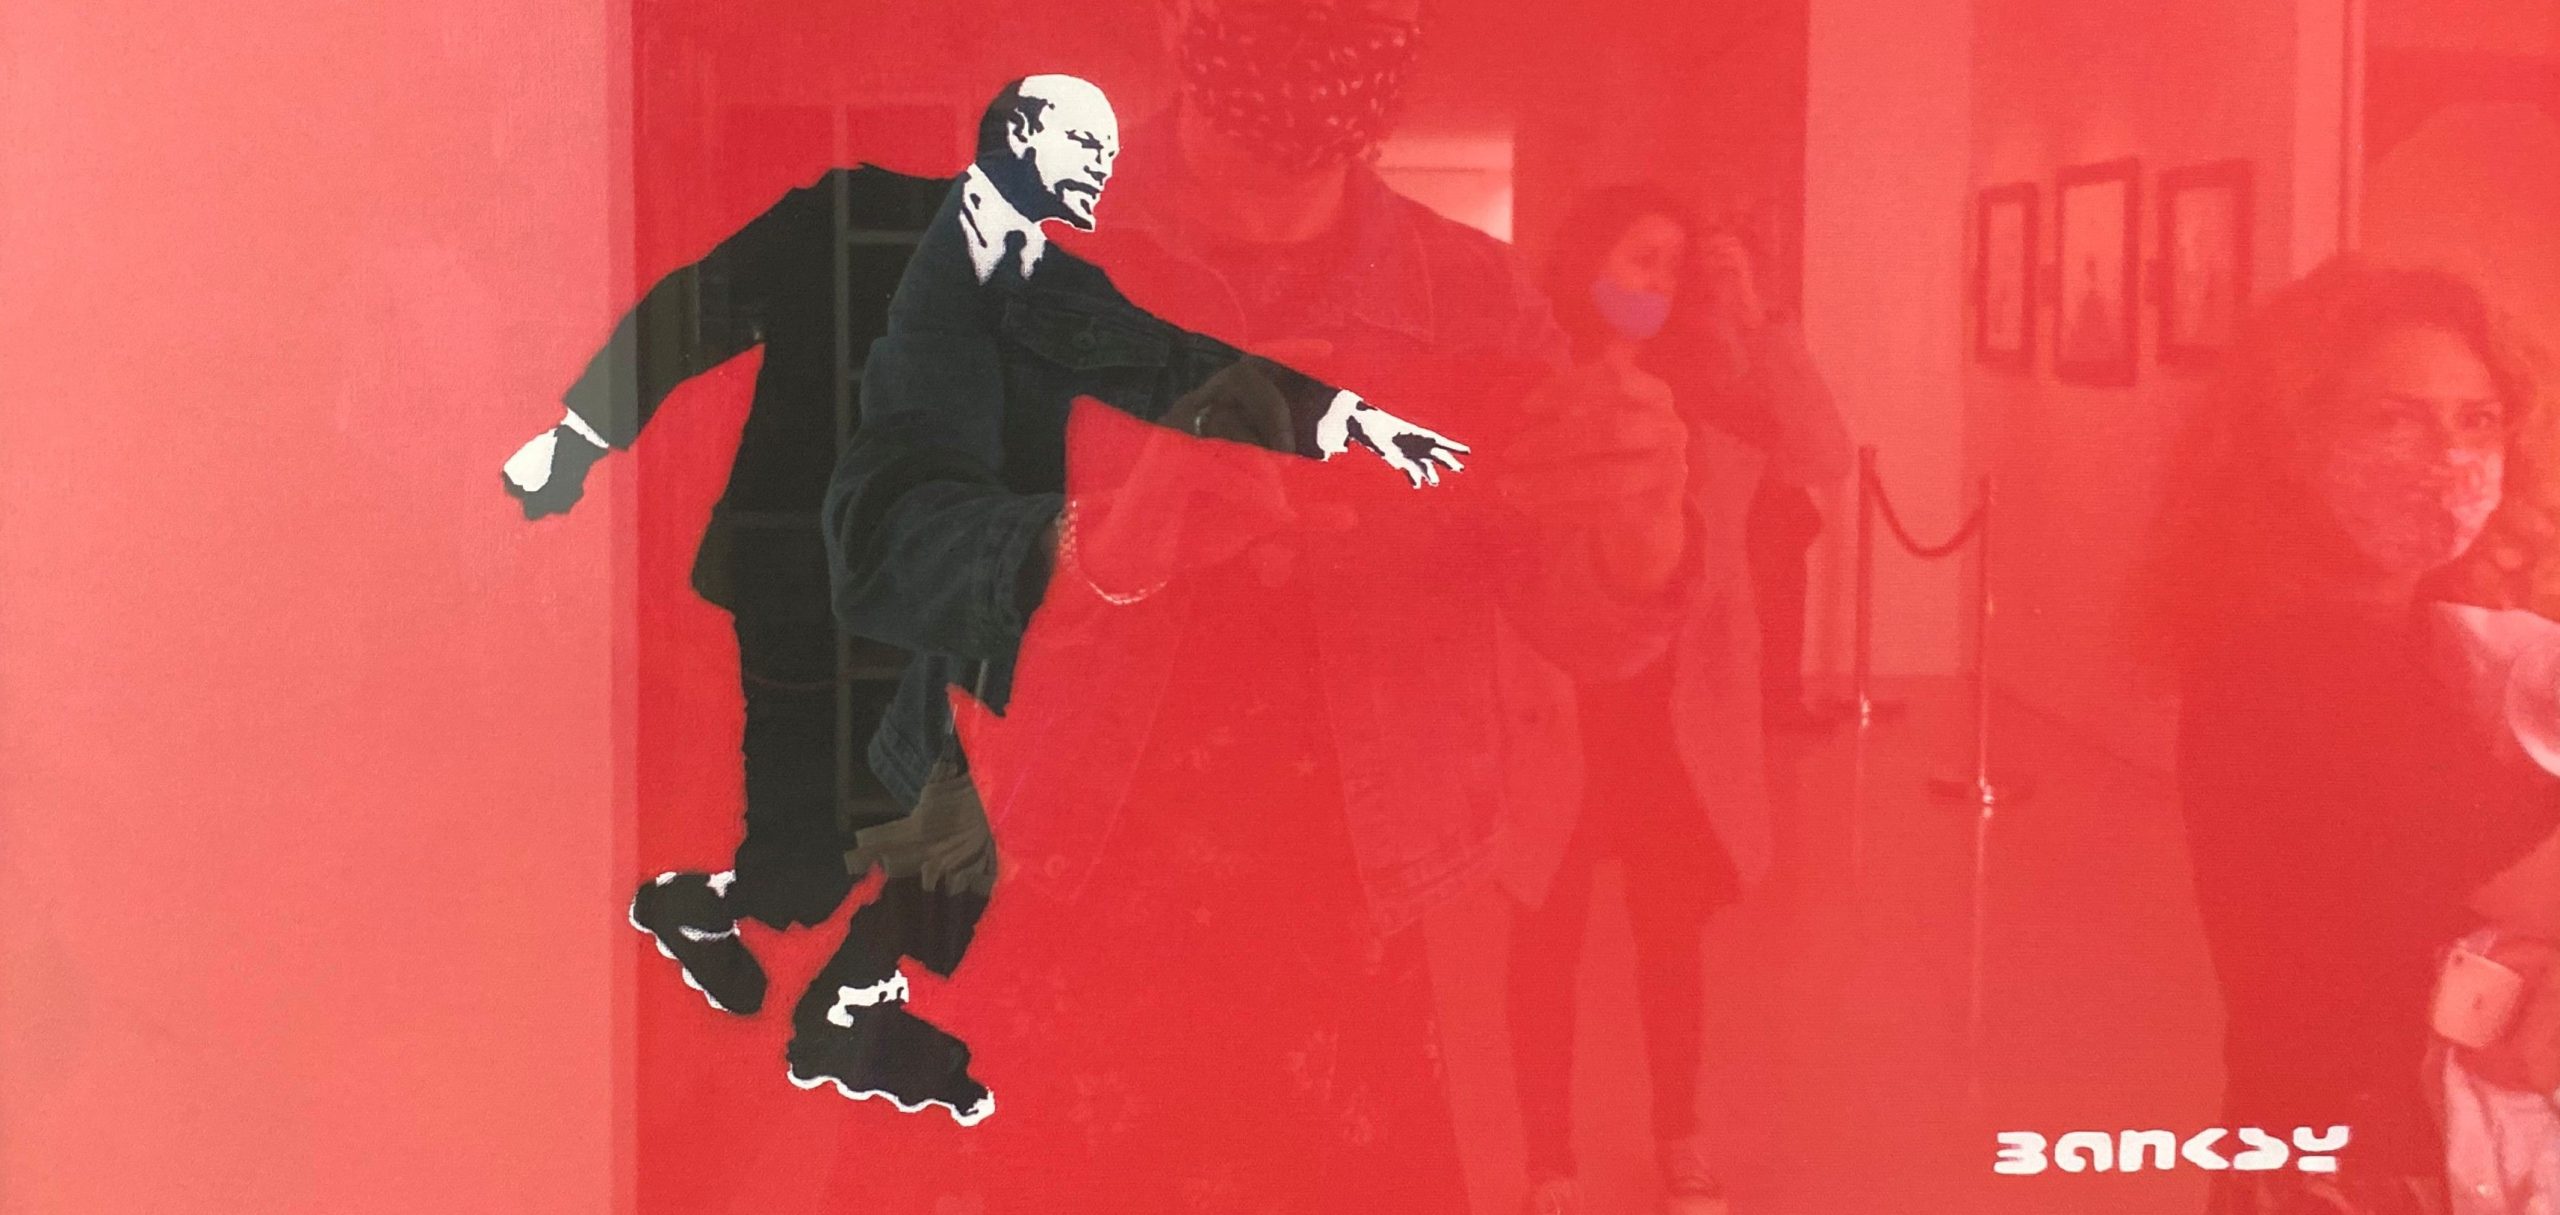 Visit to Banksy’s exhibition in Prague